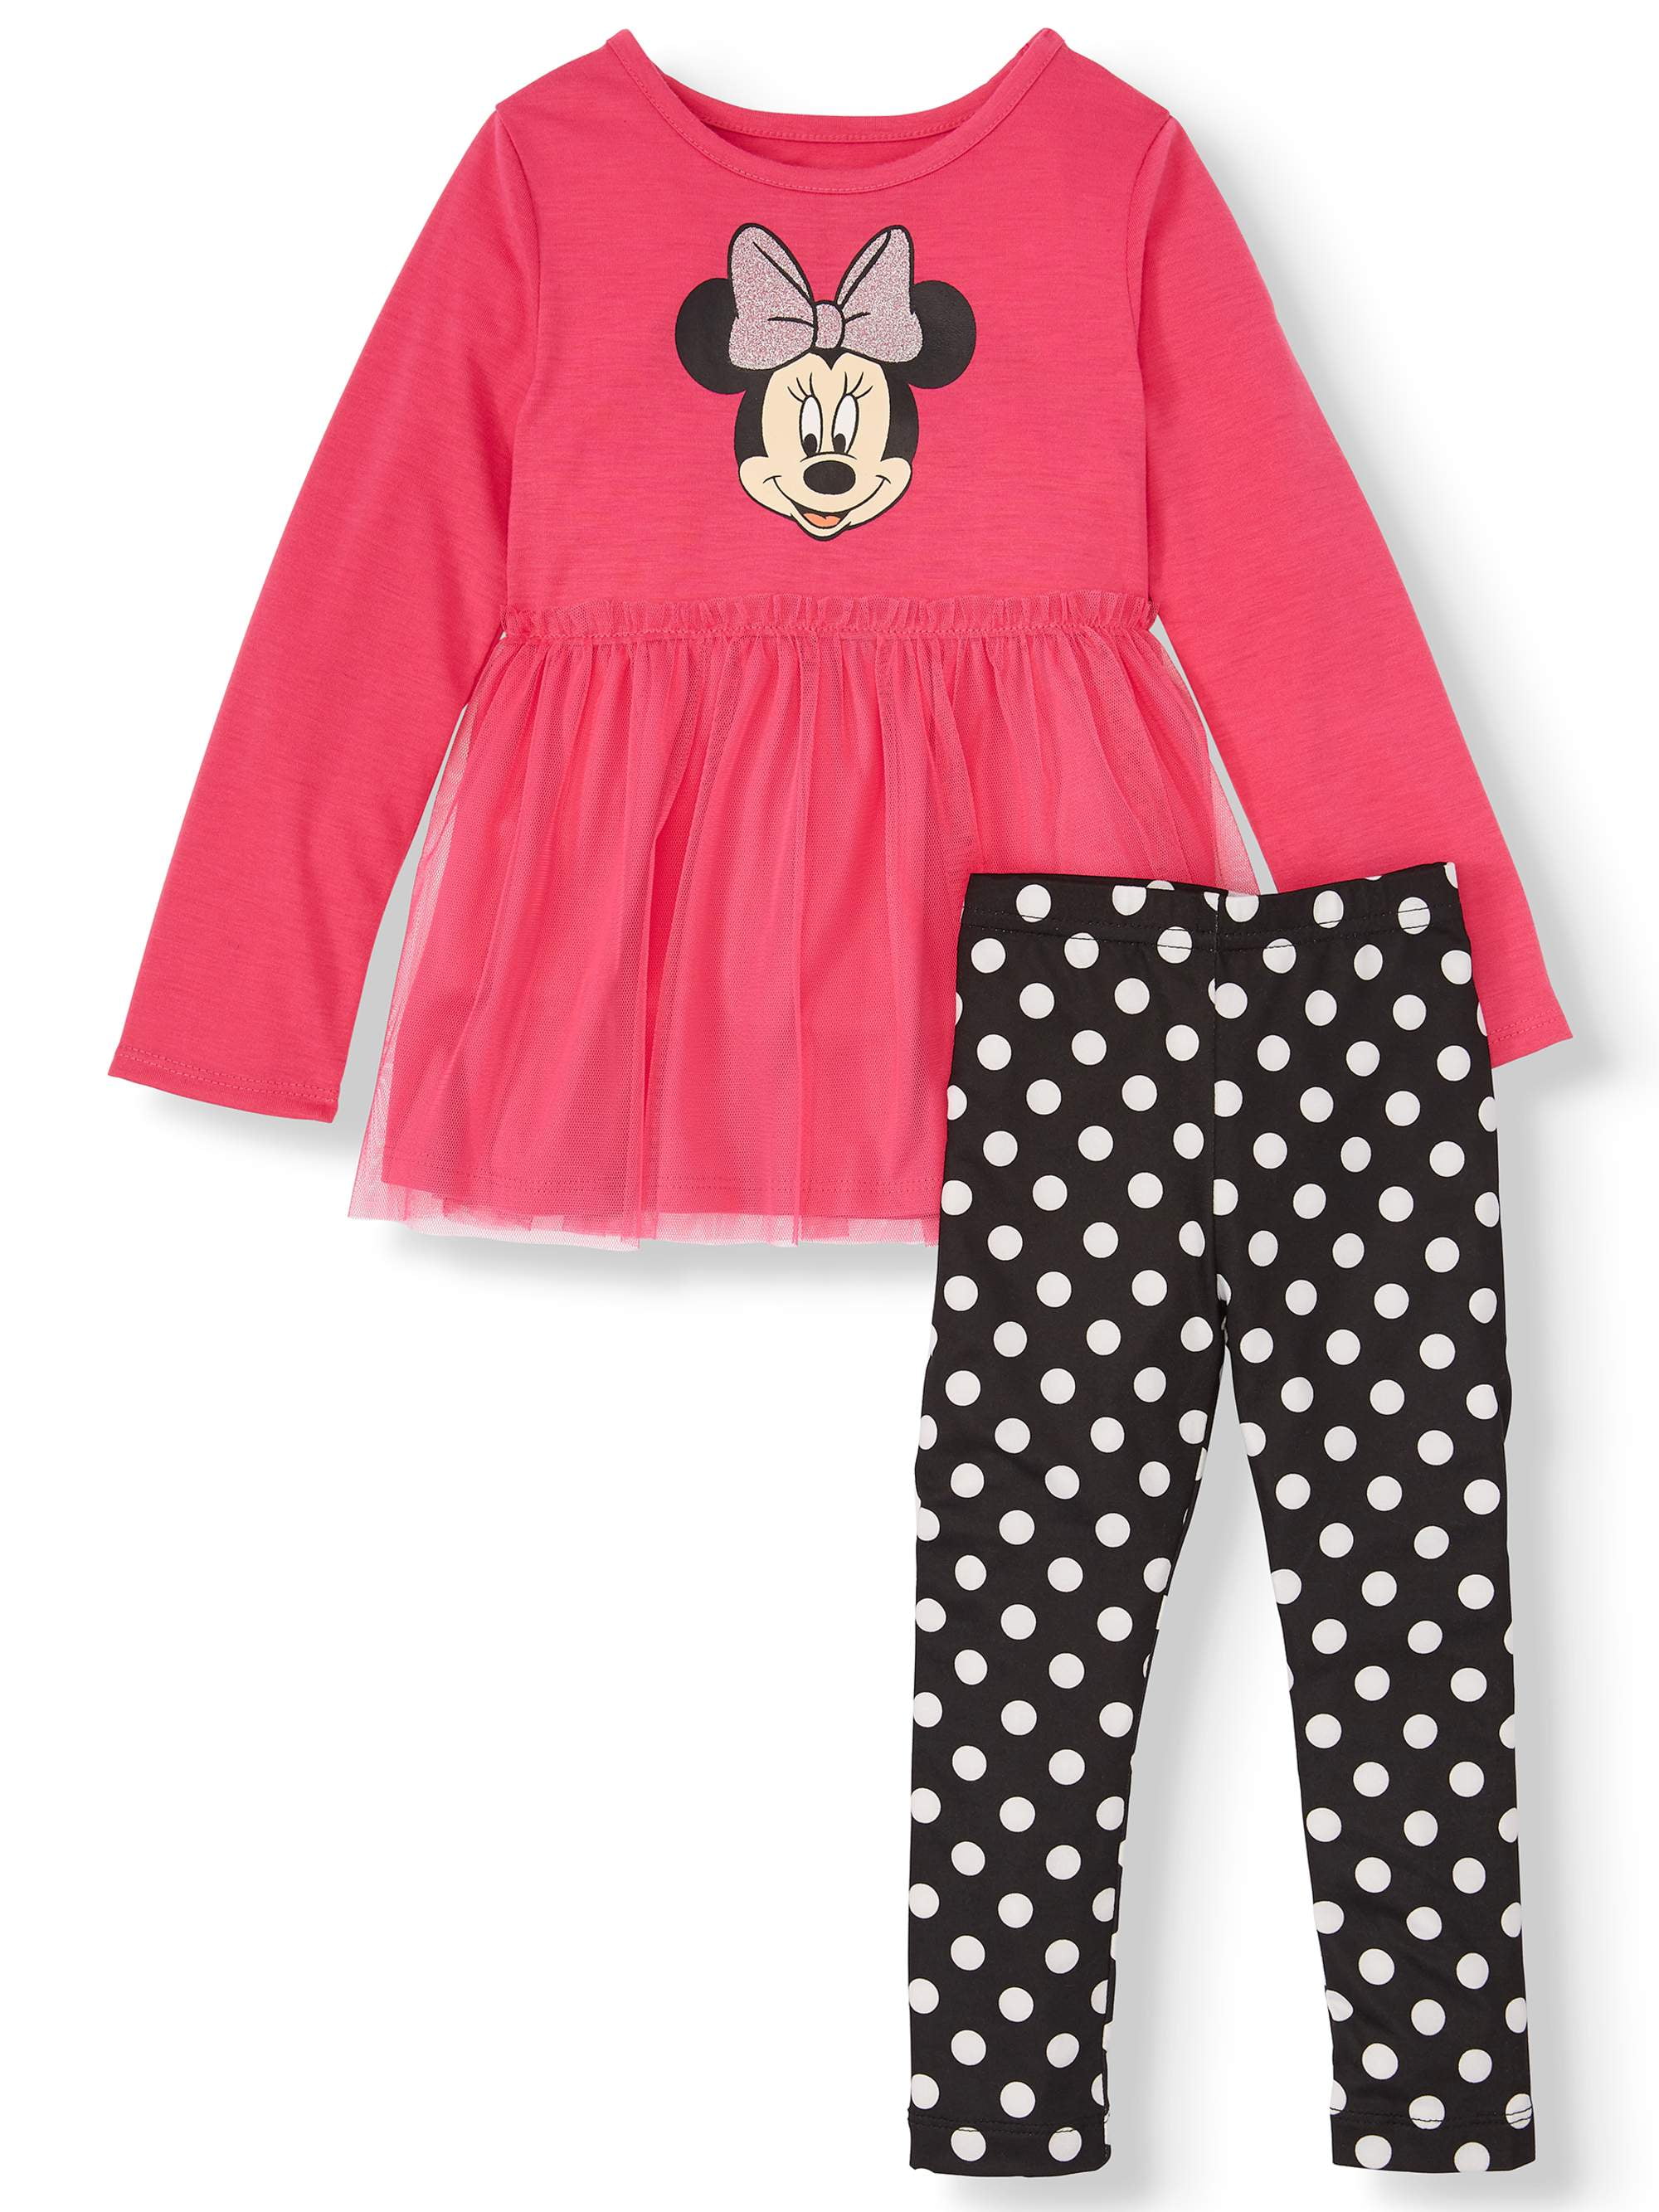 Disney Minnie Mouse Toddler Girls Long Sleeve Ruffle Tunic Shirt & Legging Set 